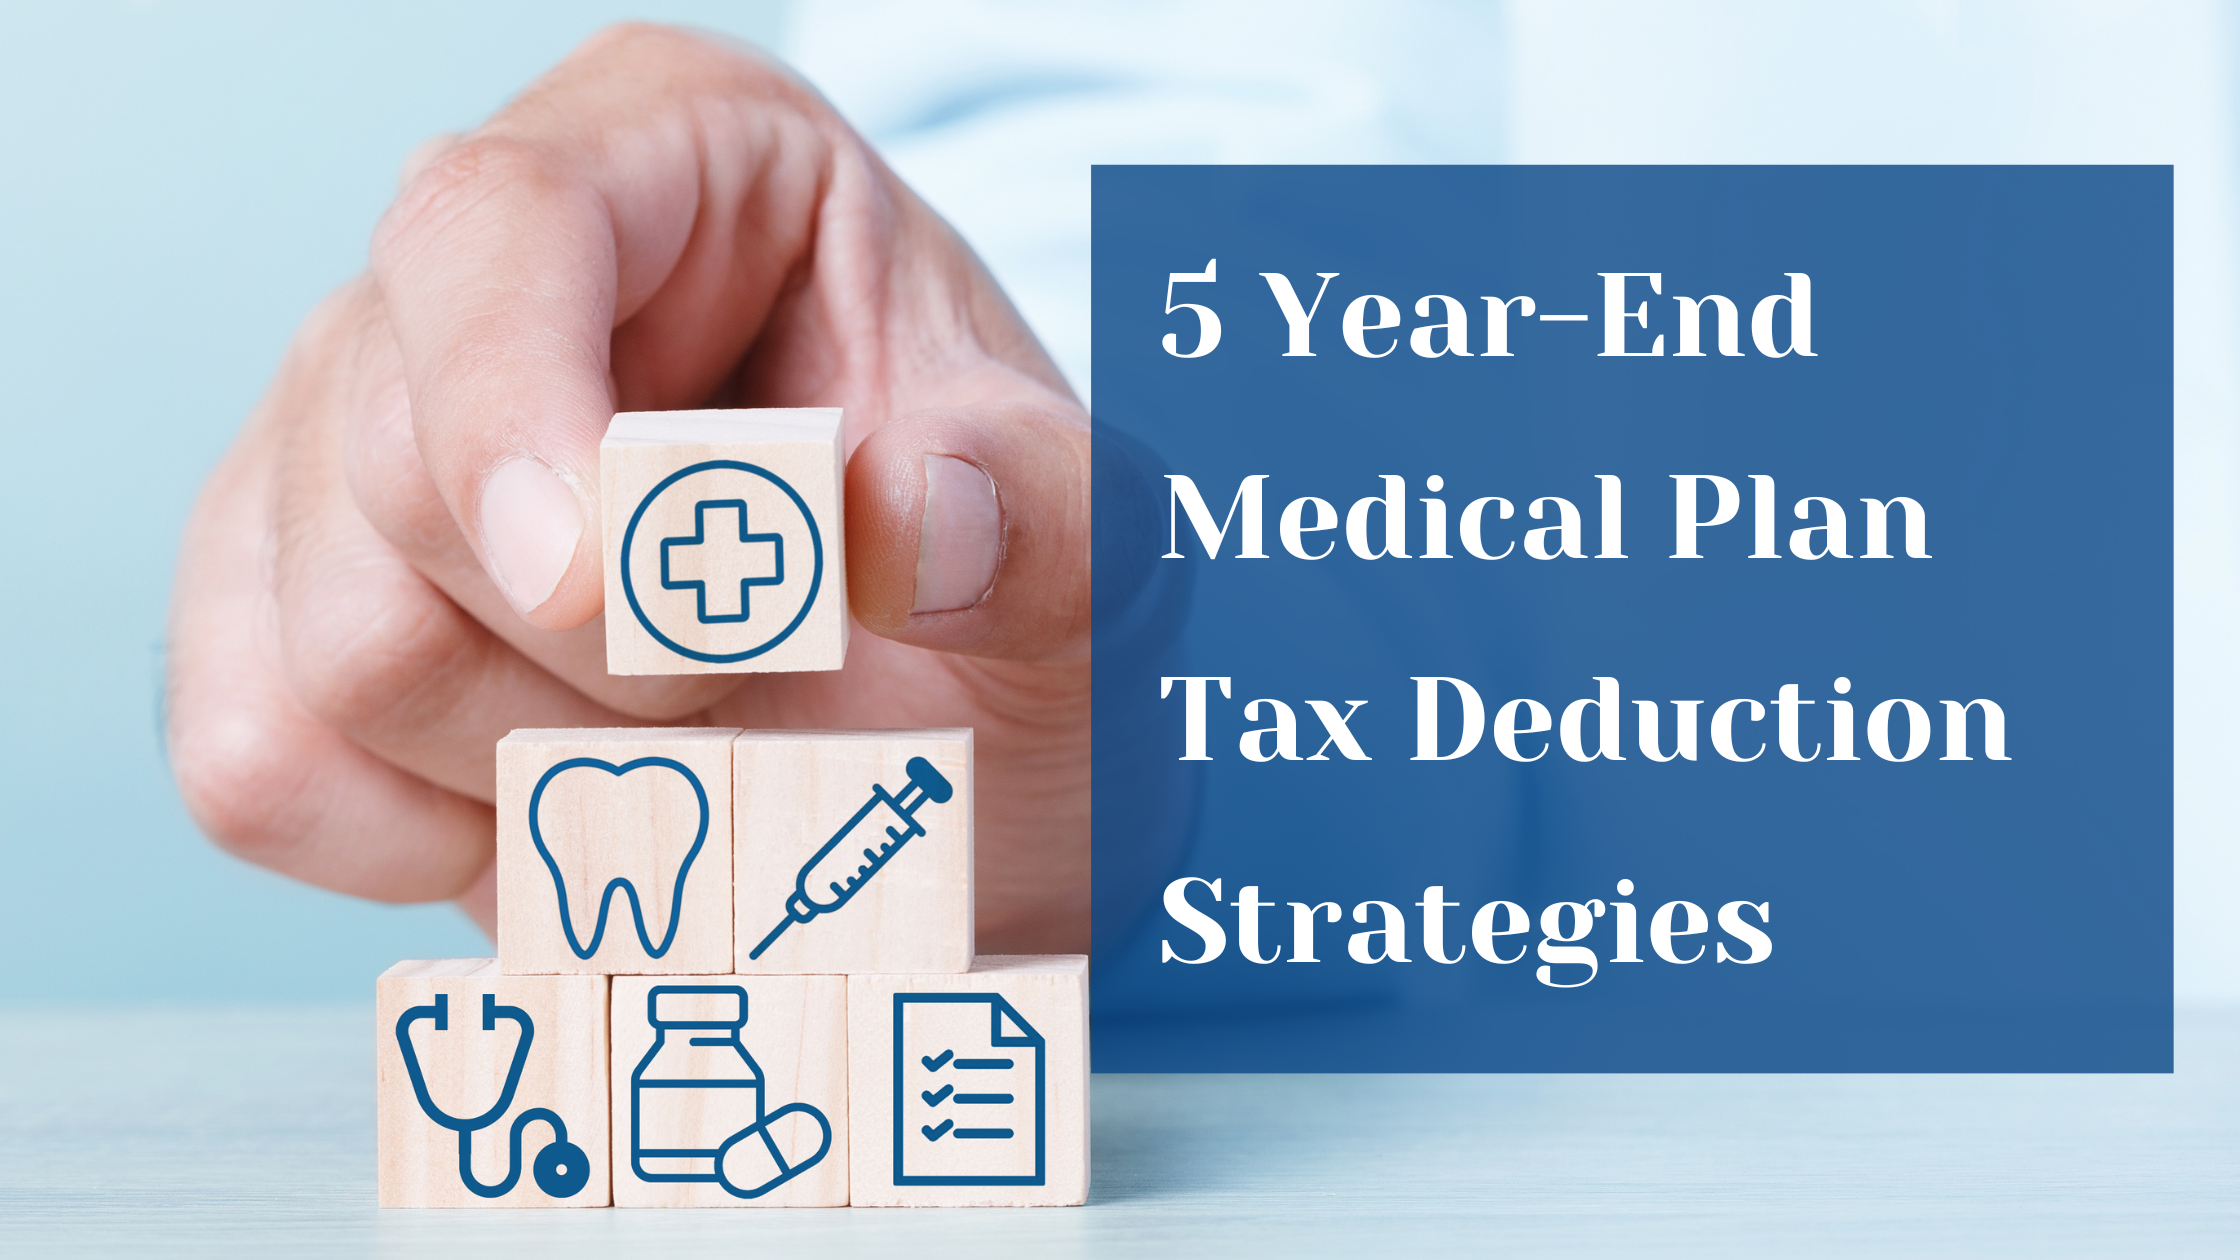 5 Year-End Medical Plan Tax Deduction Strategies